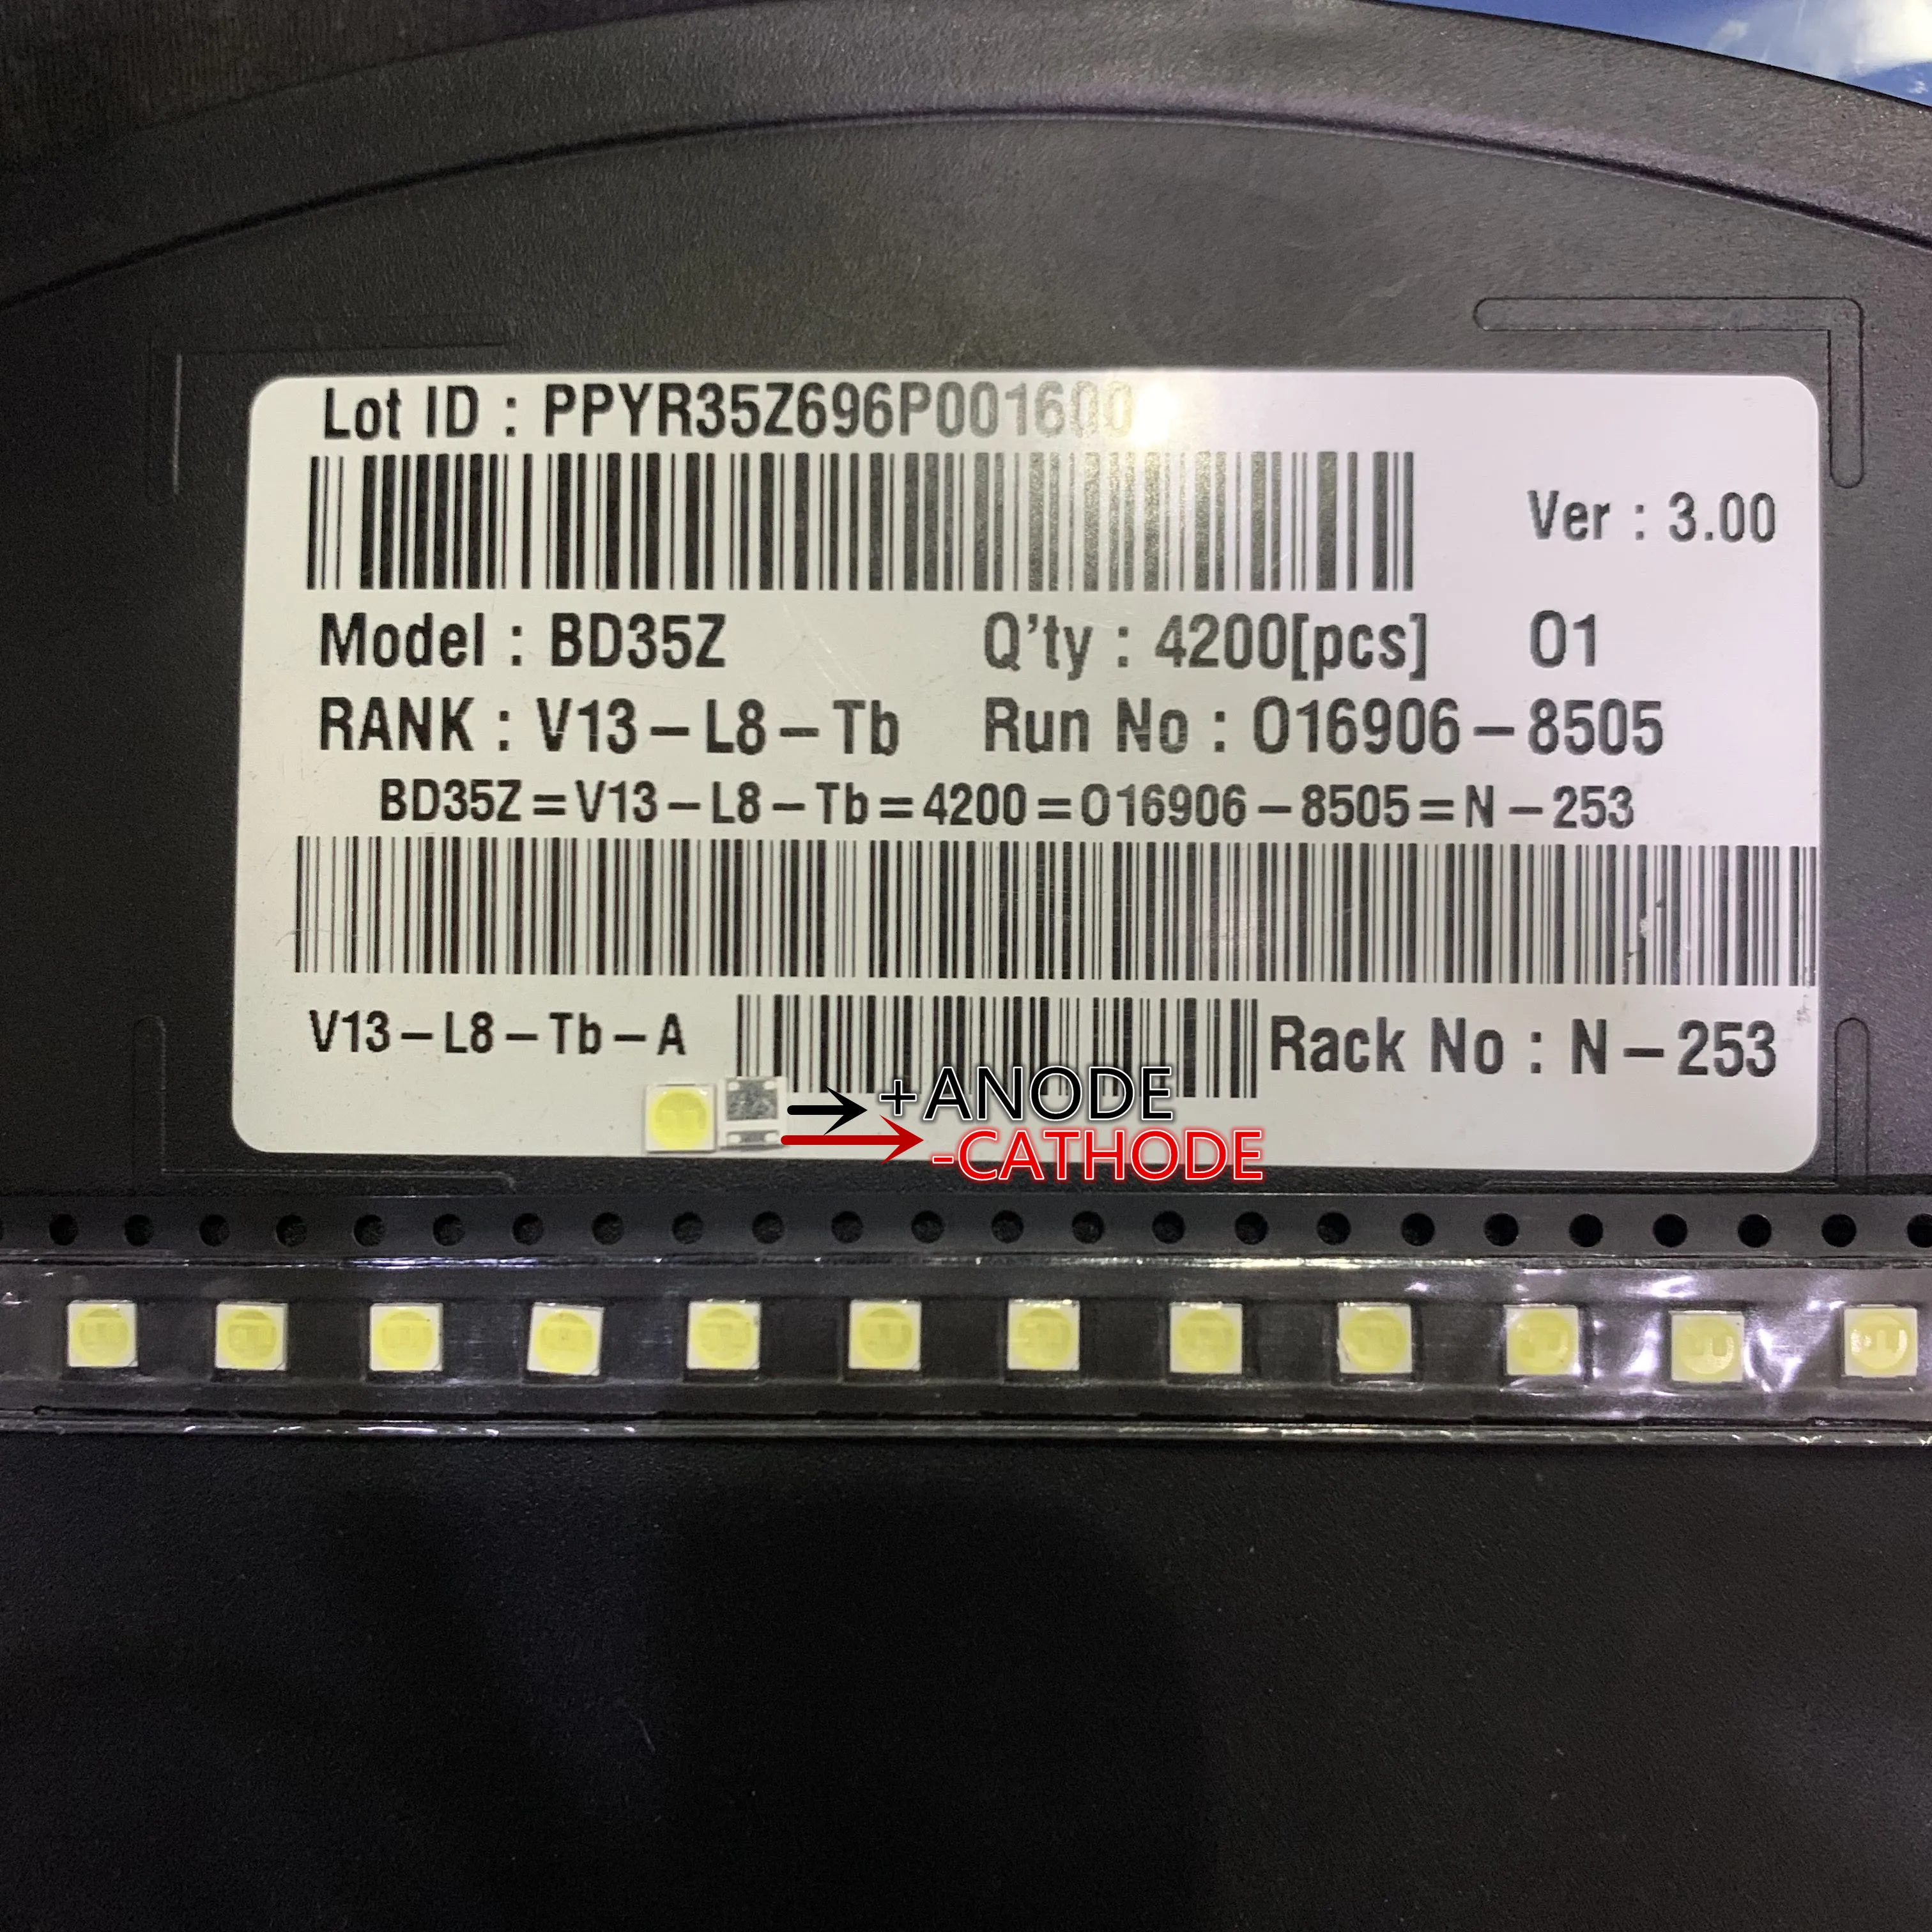 100KS PRE LCD TV opravy LG led TV podsvietenie pás svetla s light-emitting diode 3535 SMD LED korálky 6V . ' - ' . 4